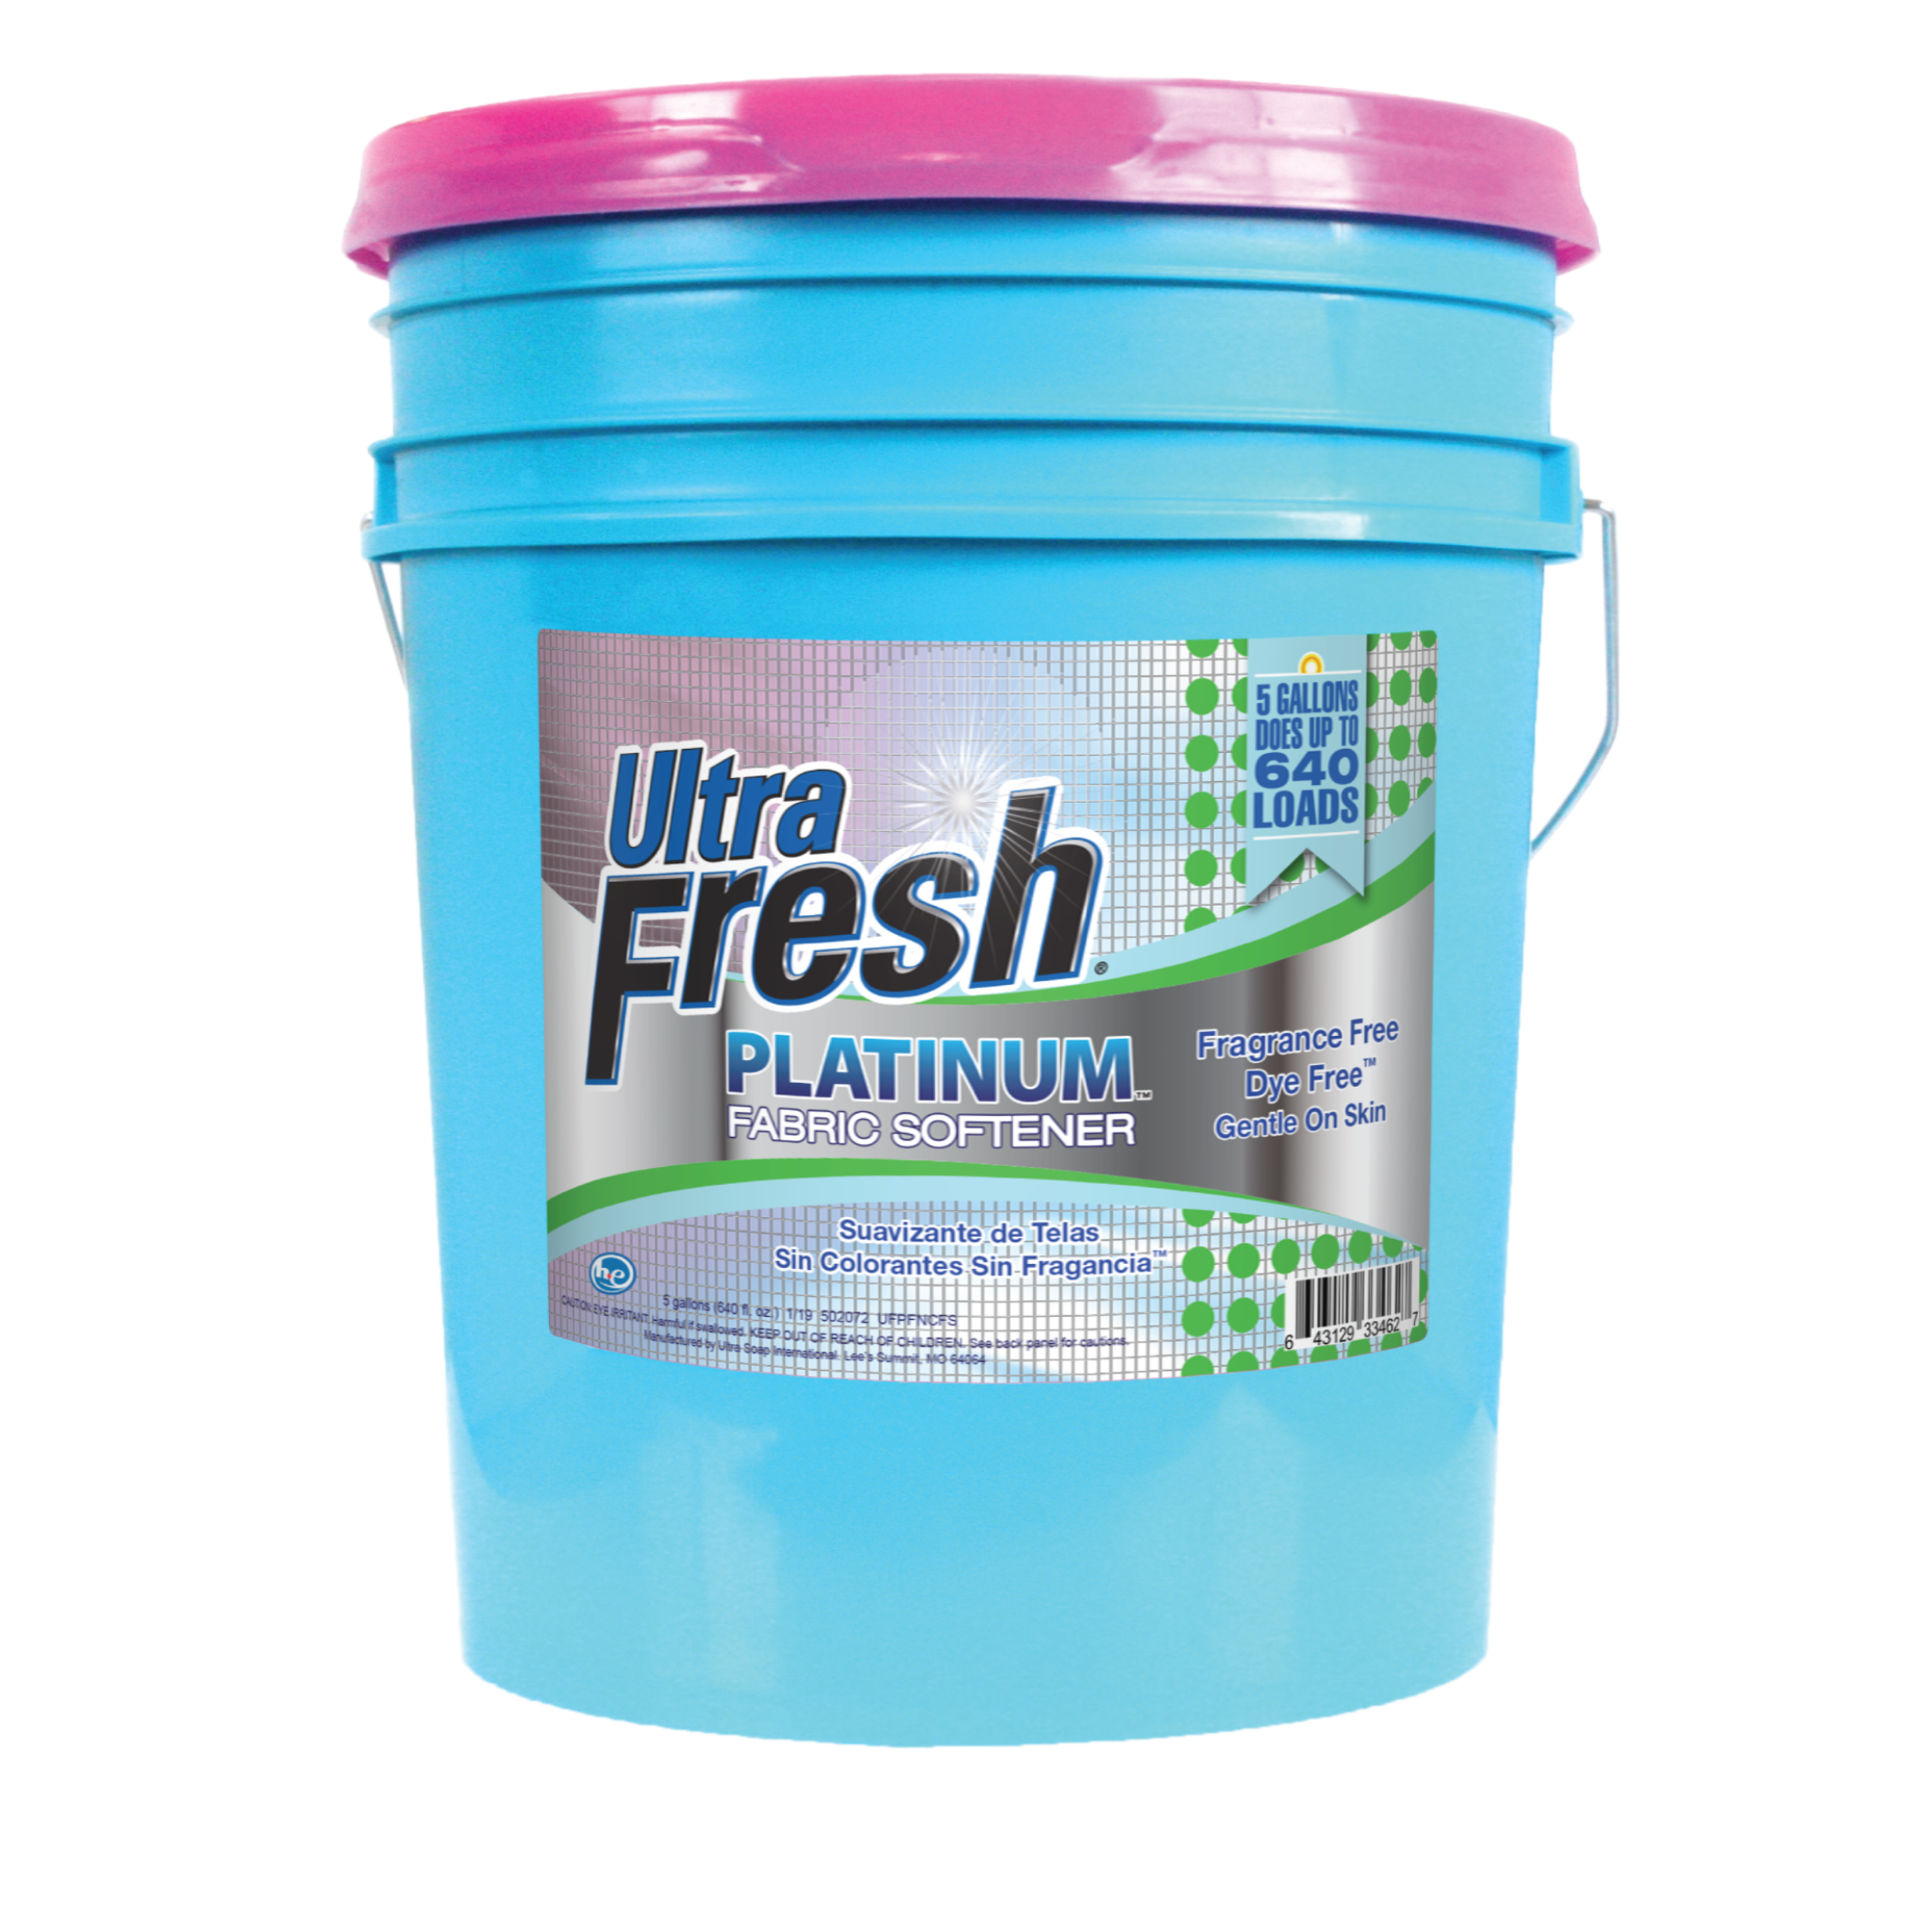 Ultra Fresh Platinum Fragrance Free & Dye Free - 5 Gallon